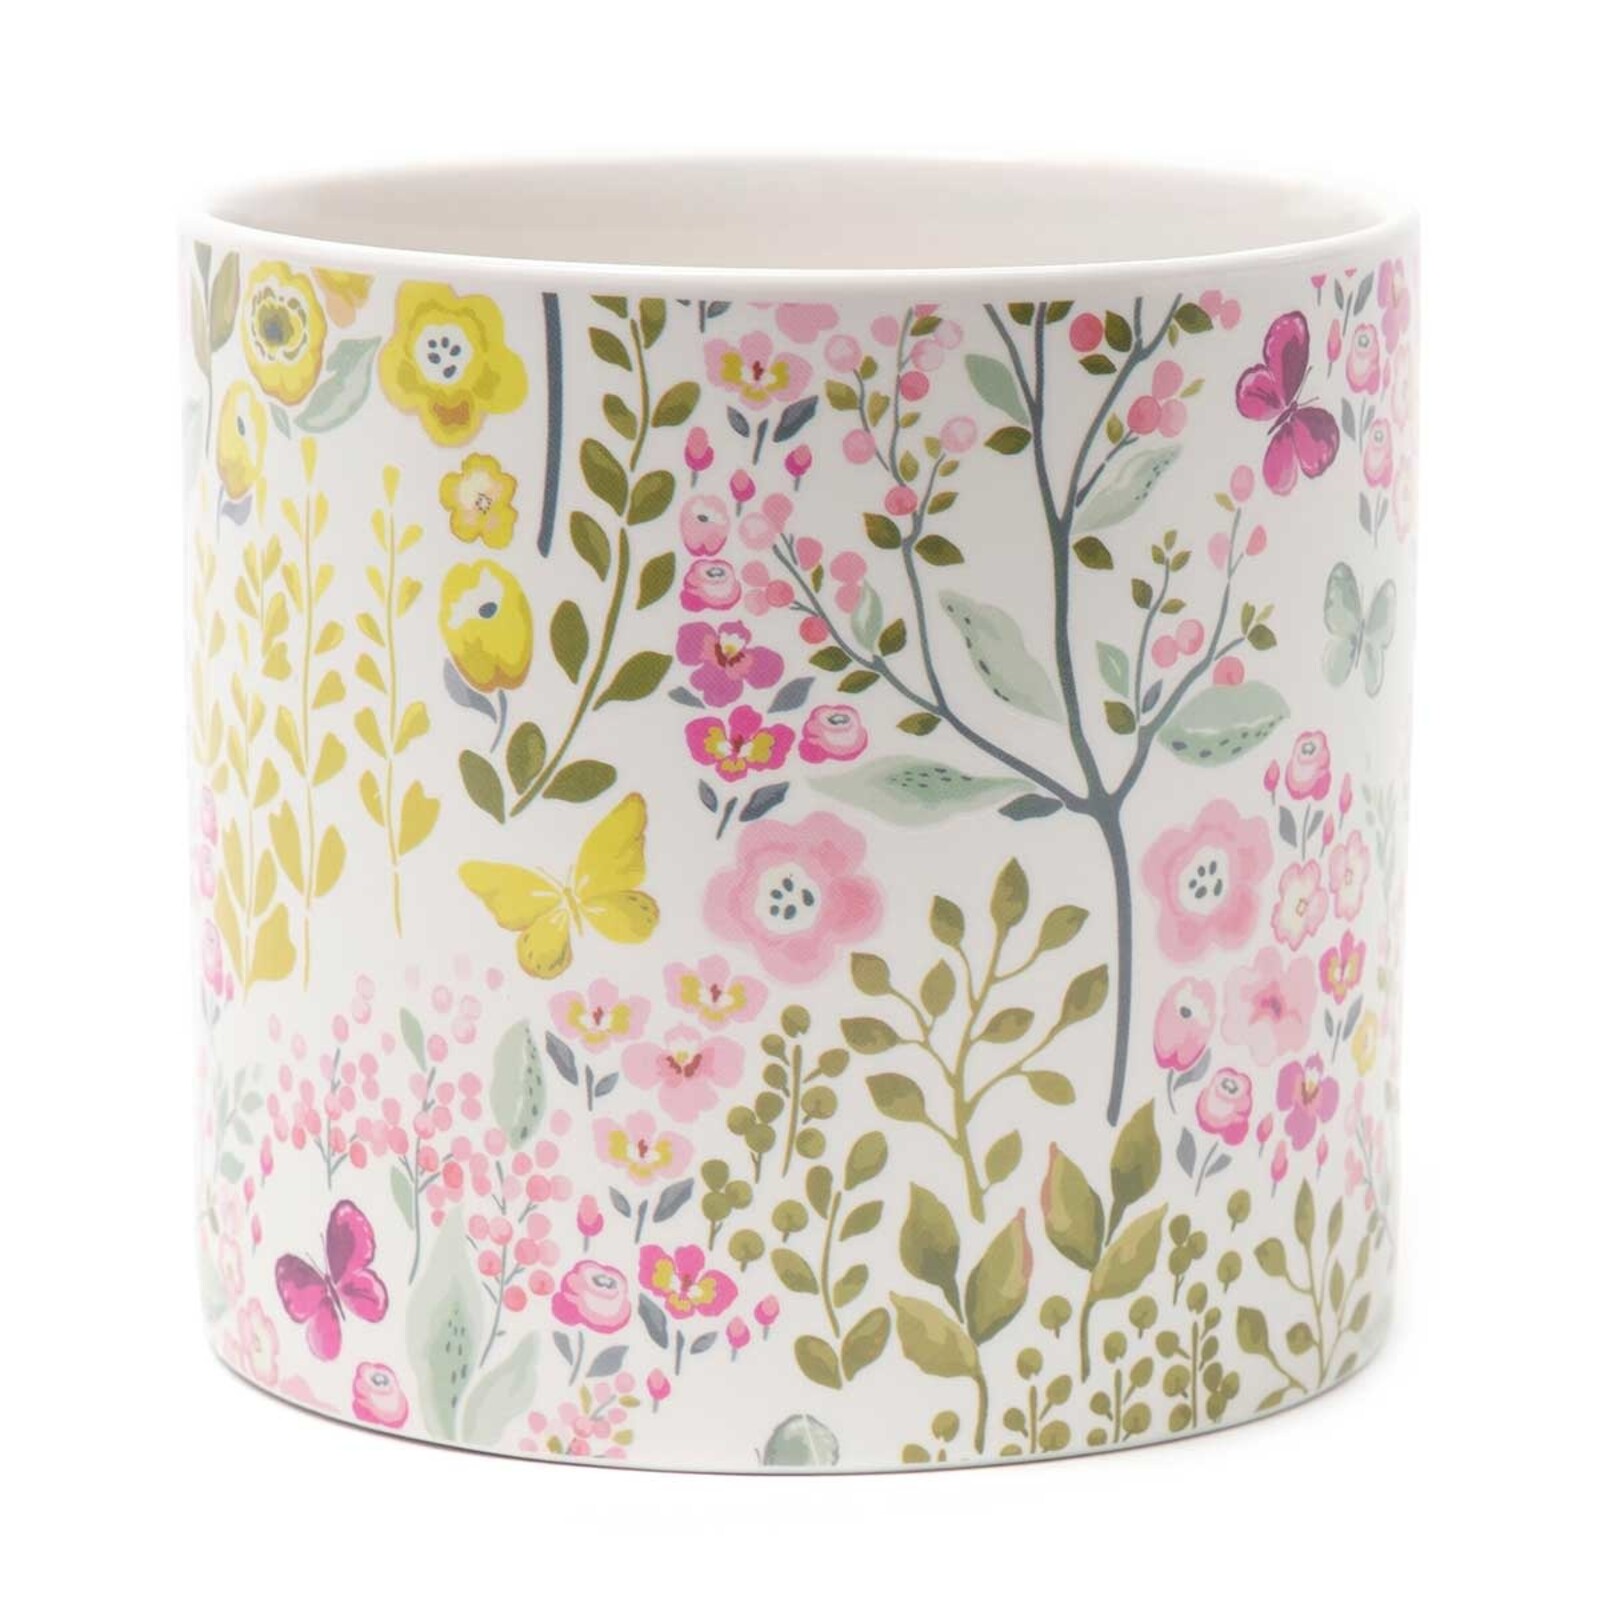 Meravic Floral Garden Porcelain Pot White Medium  A3191 loading=